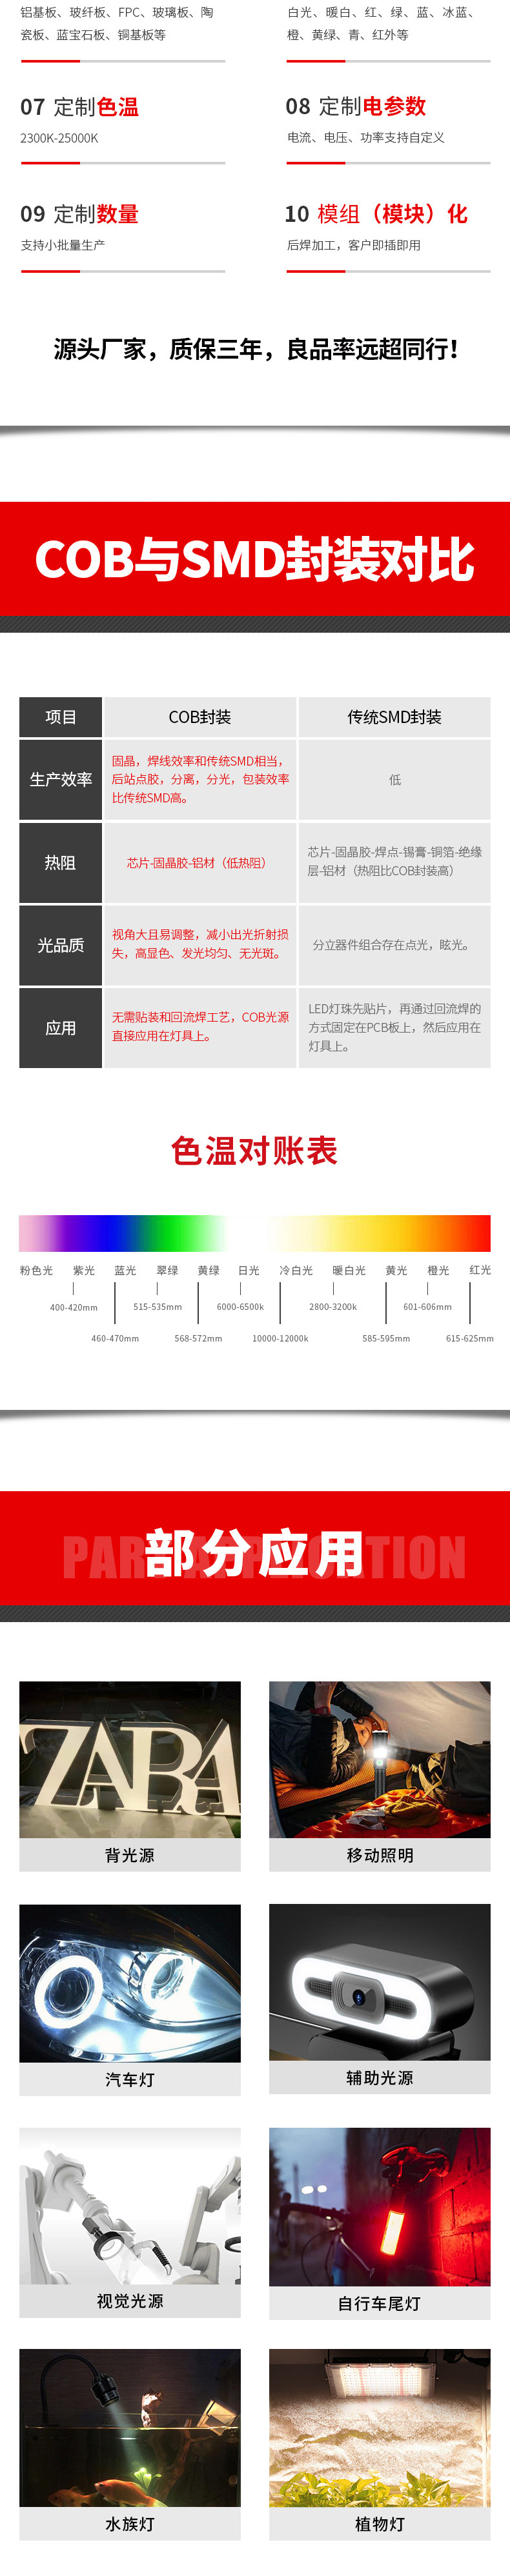 Dual color temperature 3/5W visual light source 20MM LED circular industrial camera visual inspection COB light source